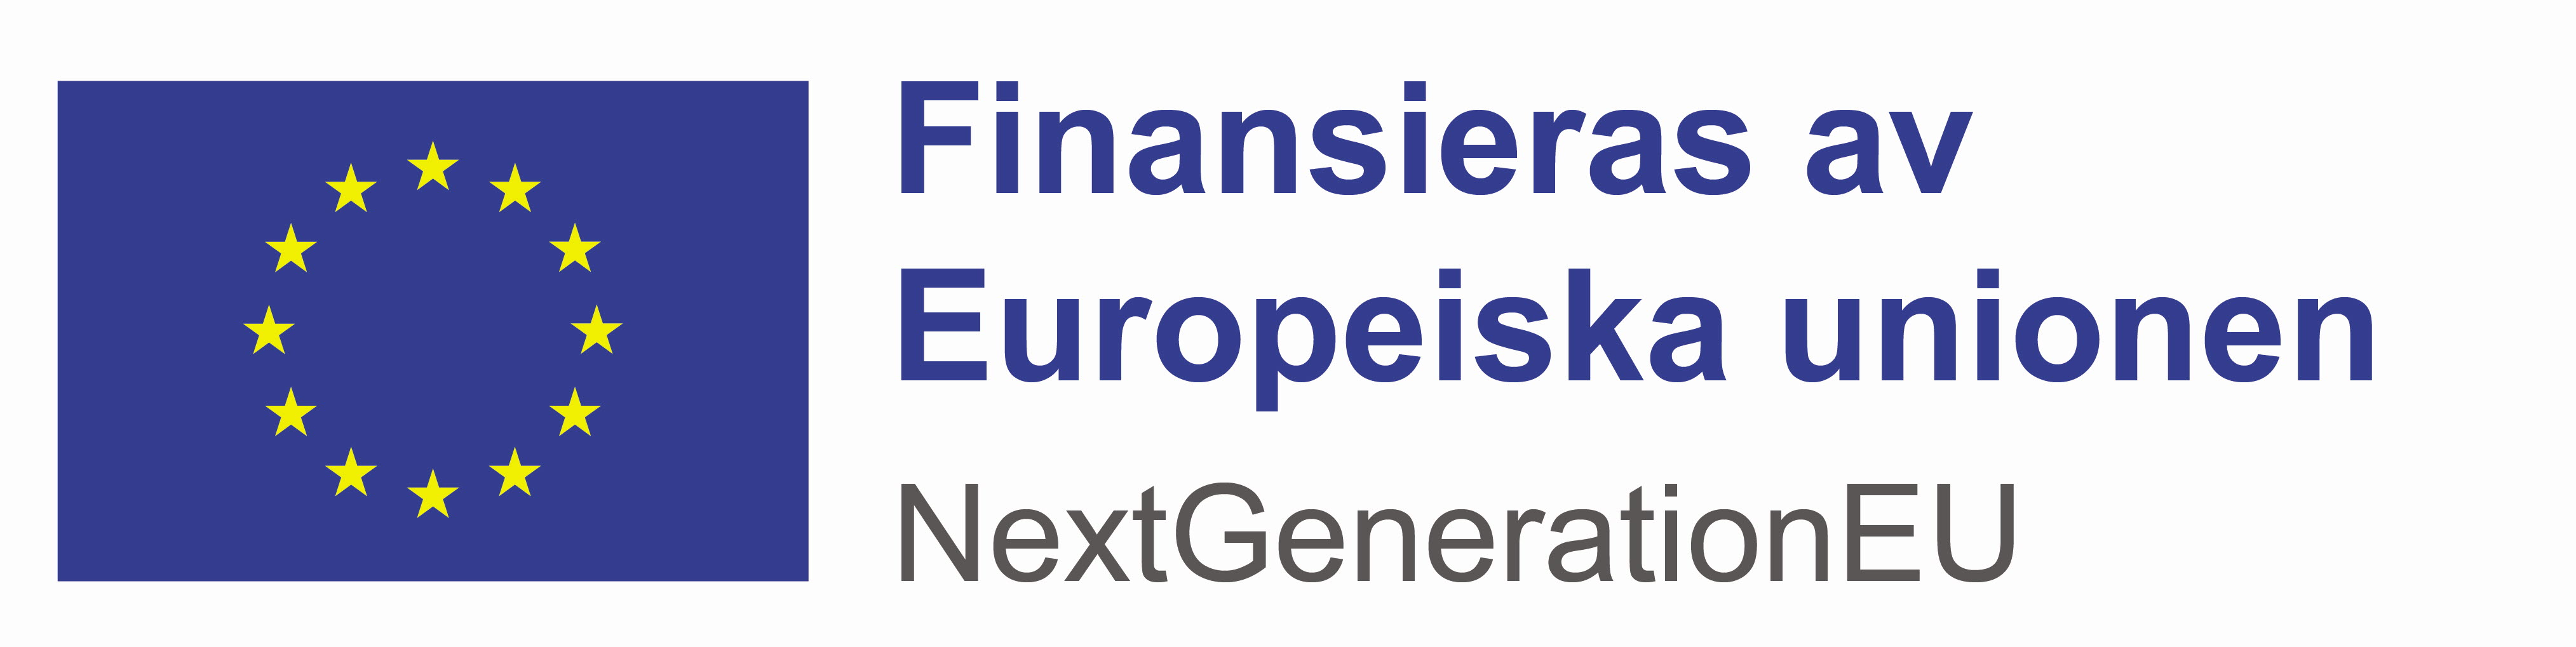 Fotot visar logotypen NextGenerationEU